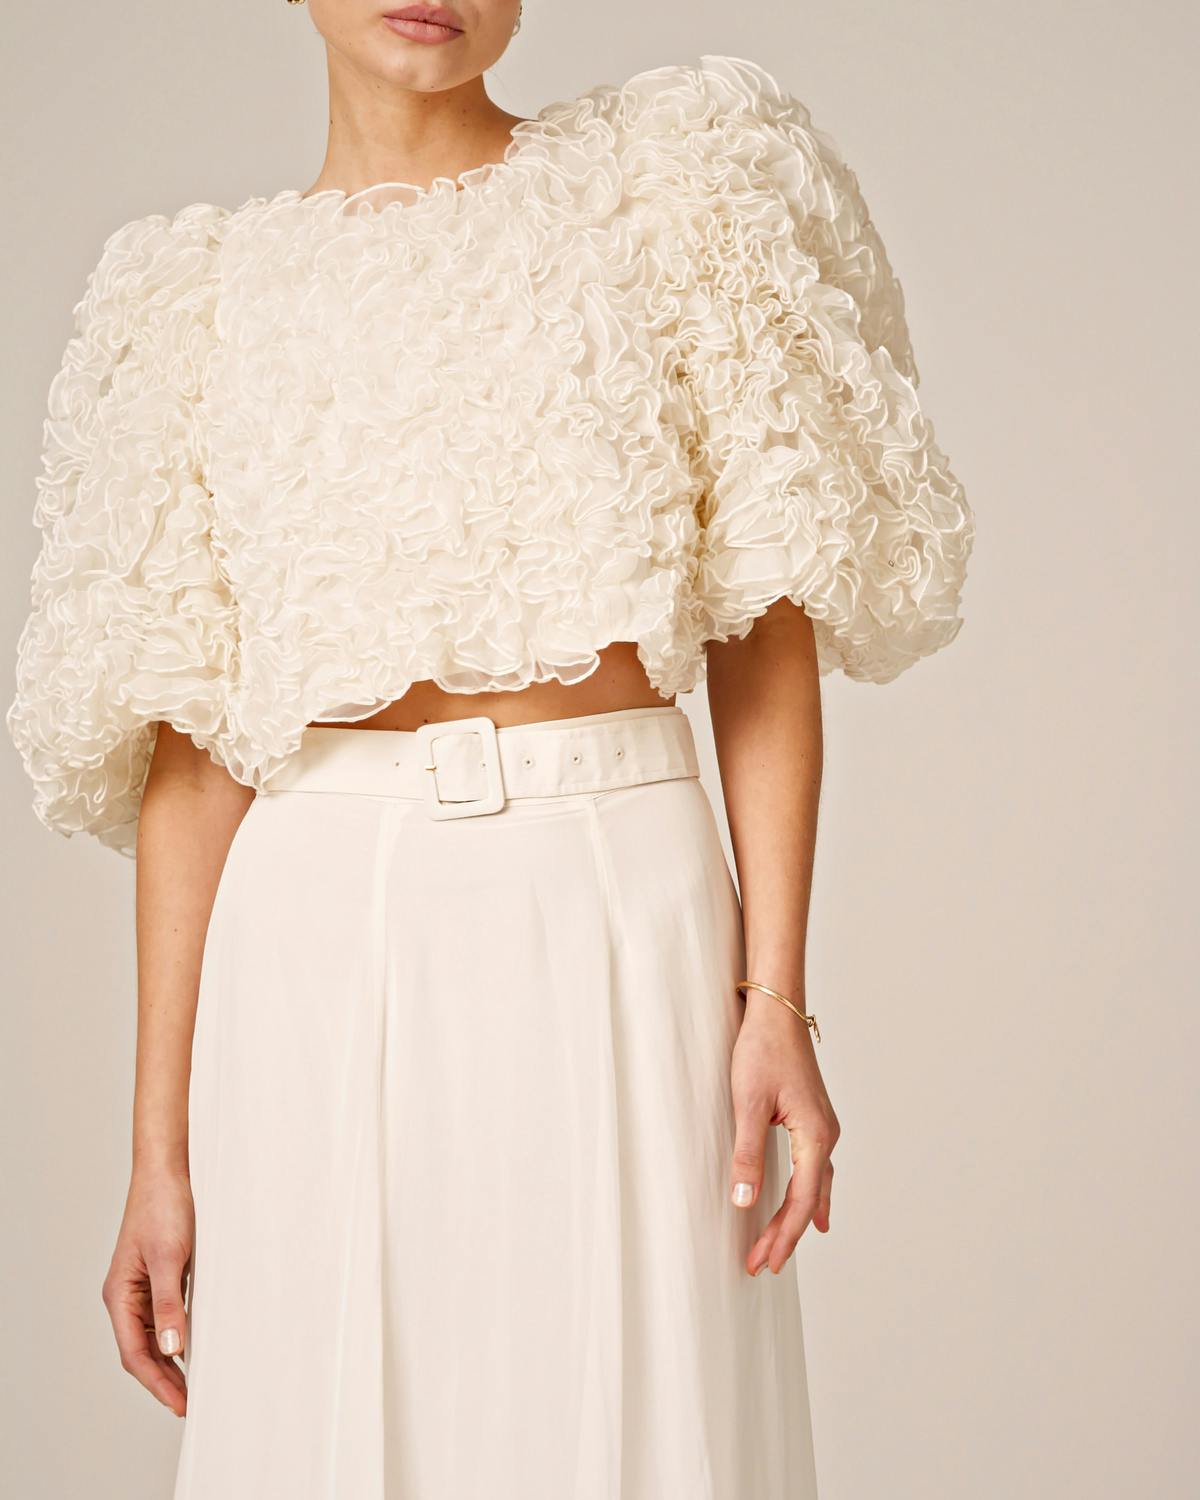 Organza Skirt, Off White. Image #3